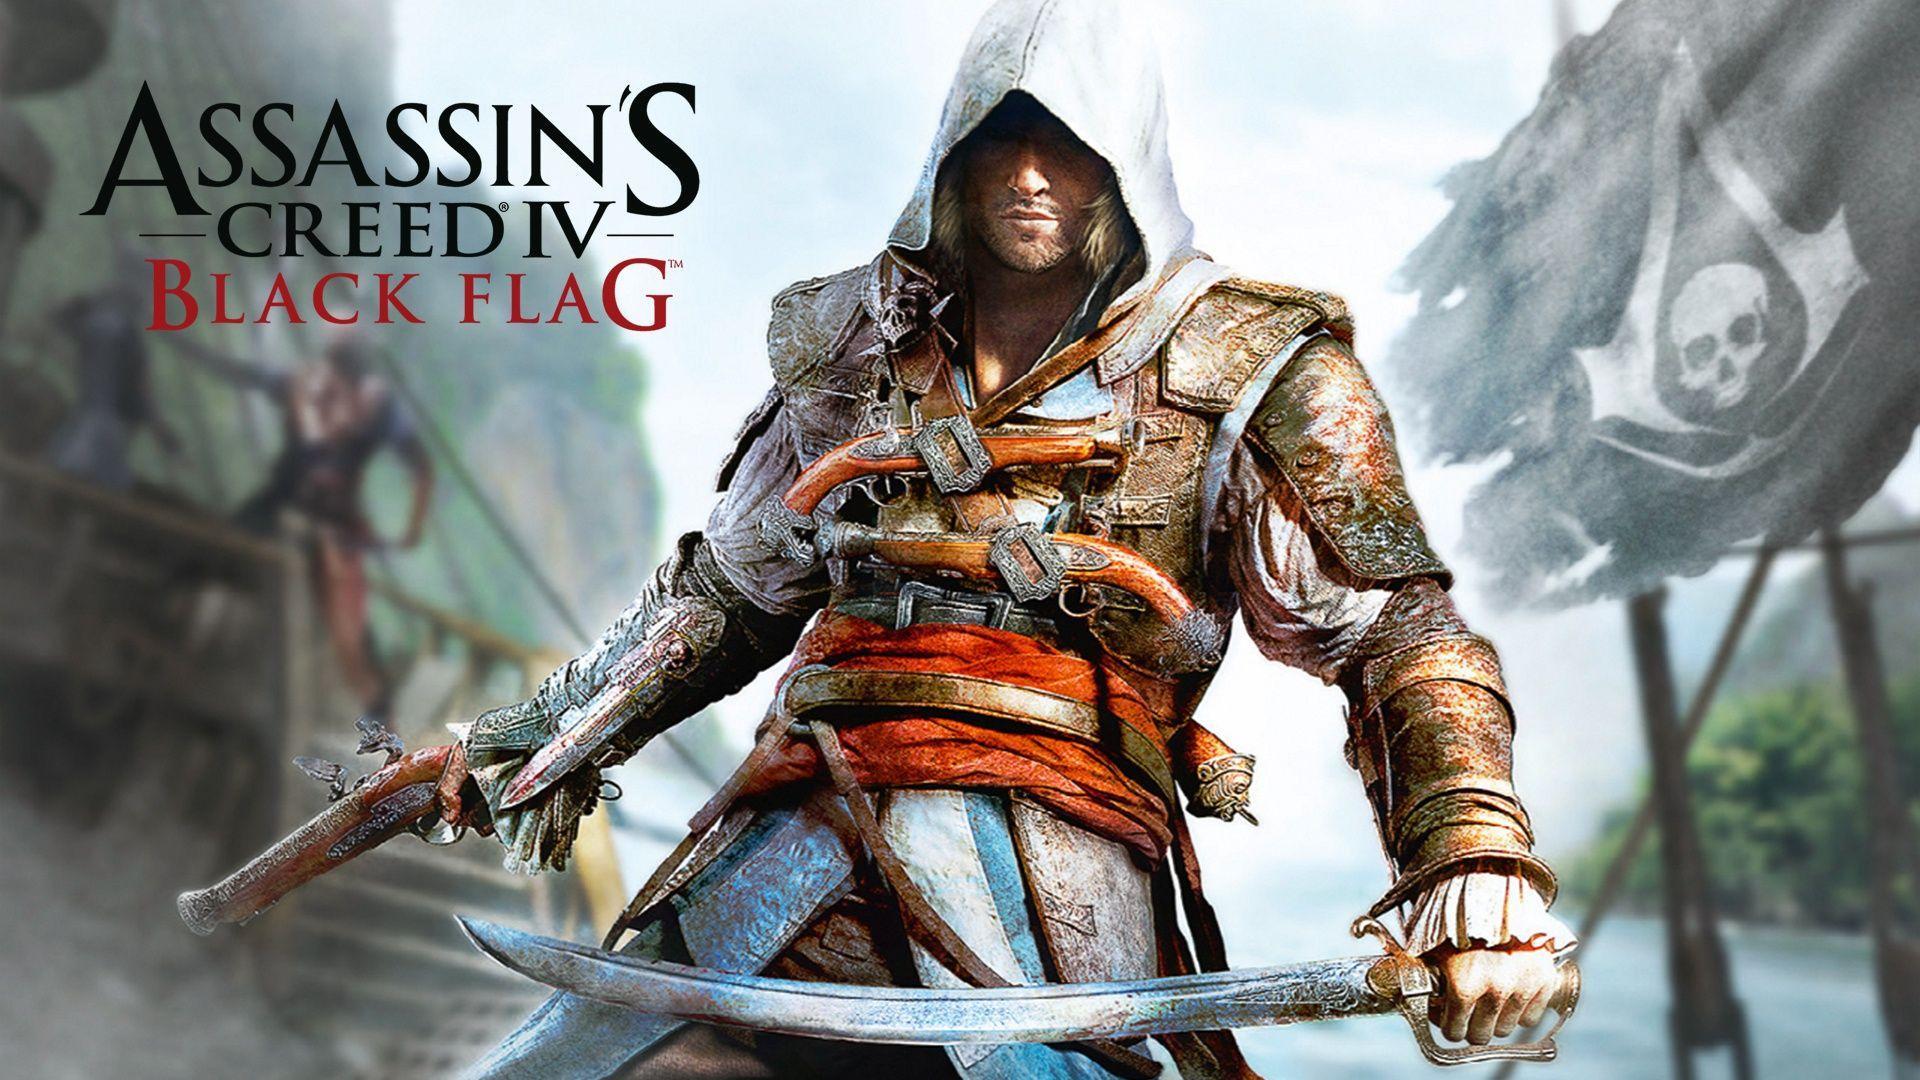 Assassins Creed Black Flag Wallpaper in jpg format for free download